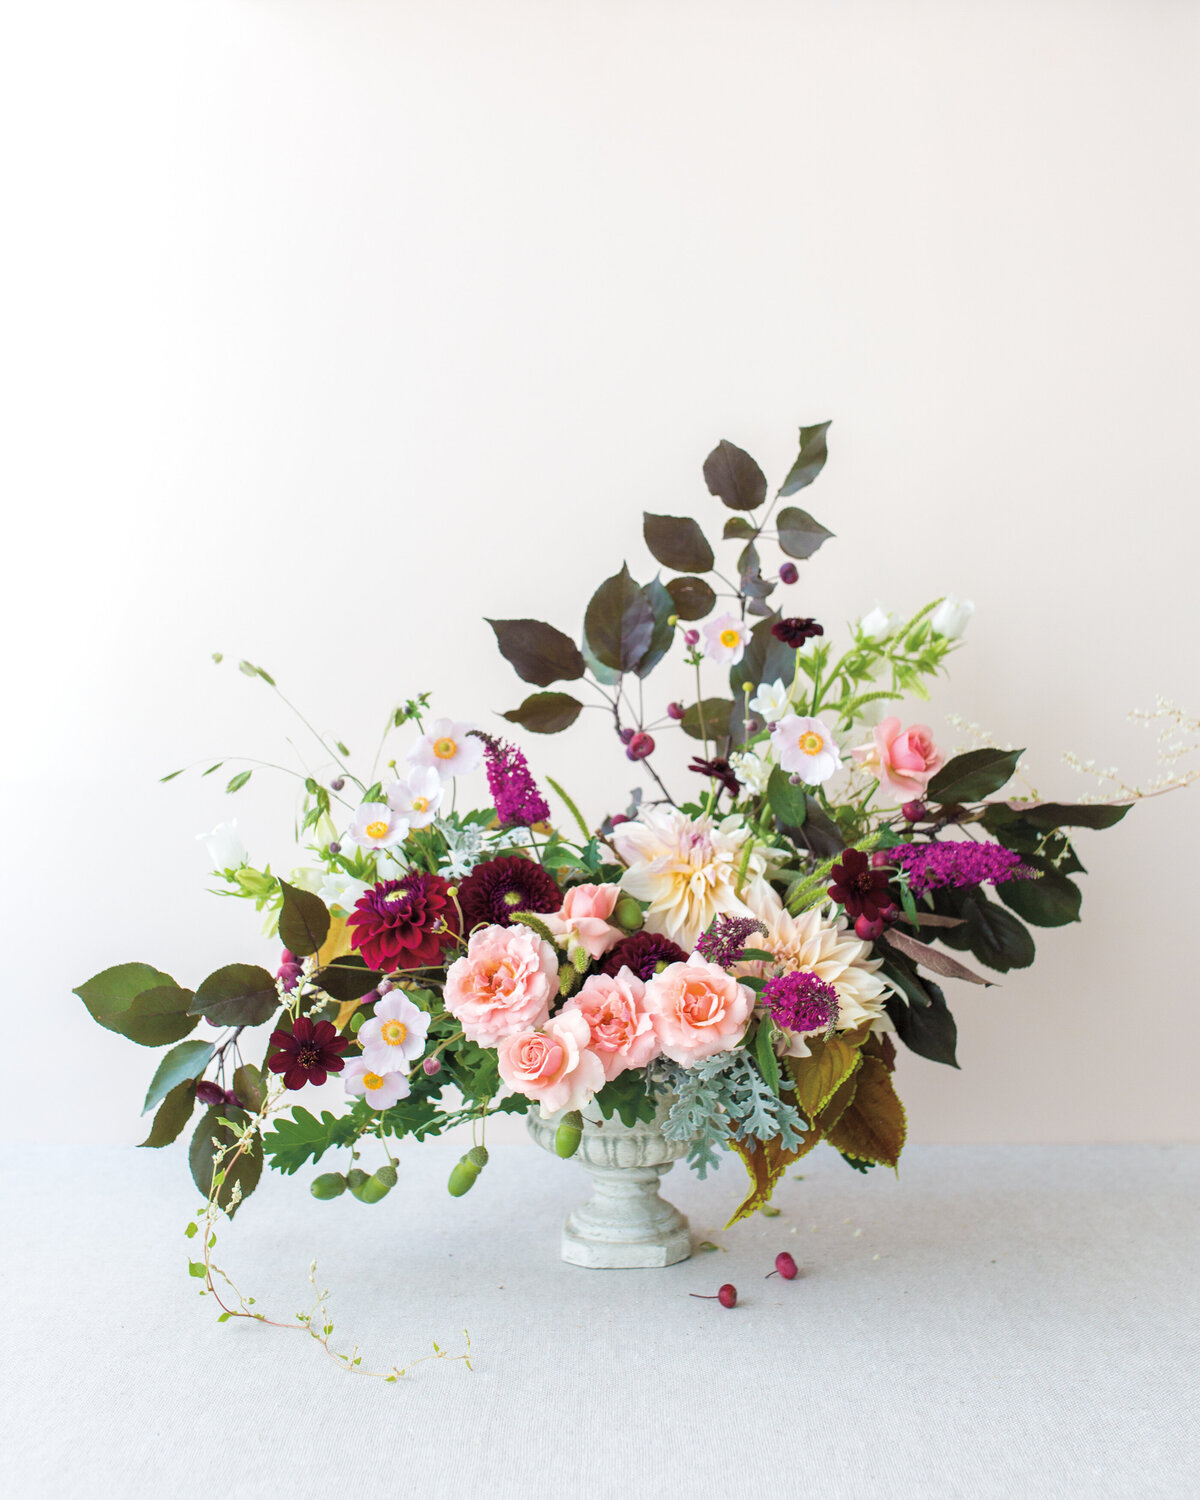 Atelier-Carmel-Wedding-Florist-GALLERY-Arrangements-3